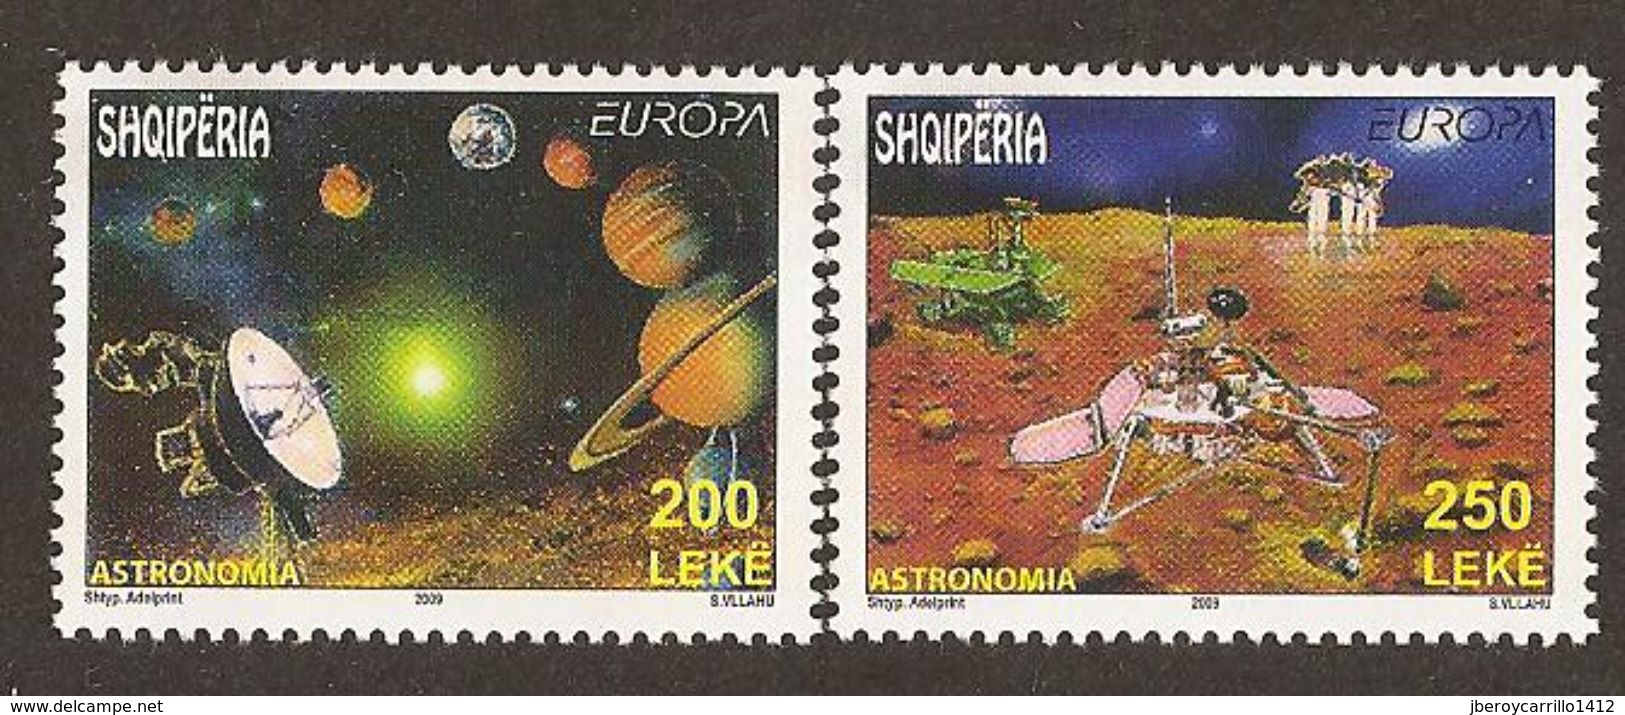 ALBANIA - EUROPE 2009 - TEMA "ASTRONOMIA" - SERIE Di 2 Francobolli PERFORATI  (PERFORATED) - 2009